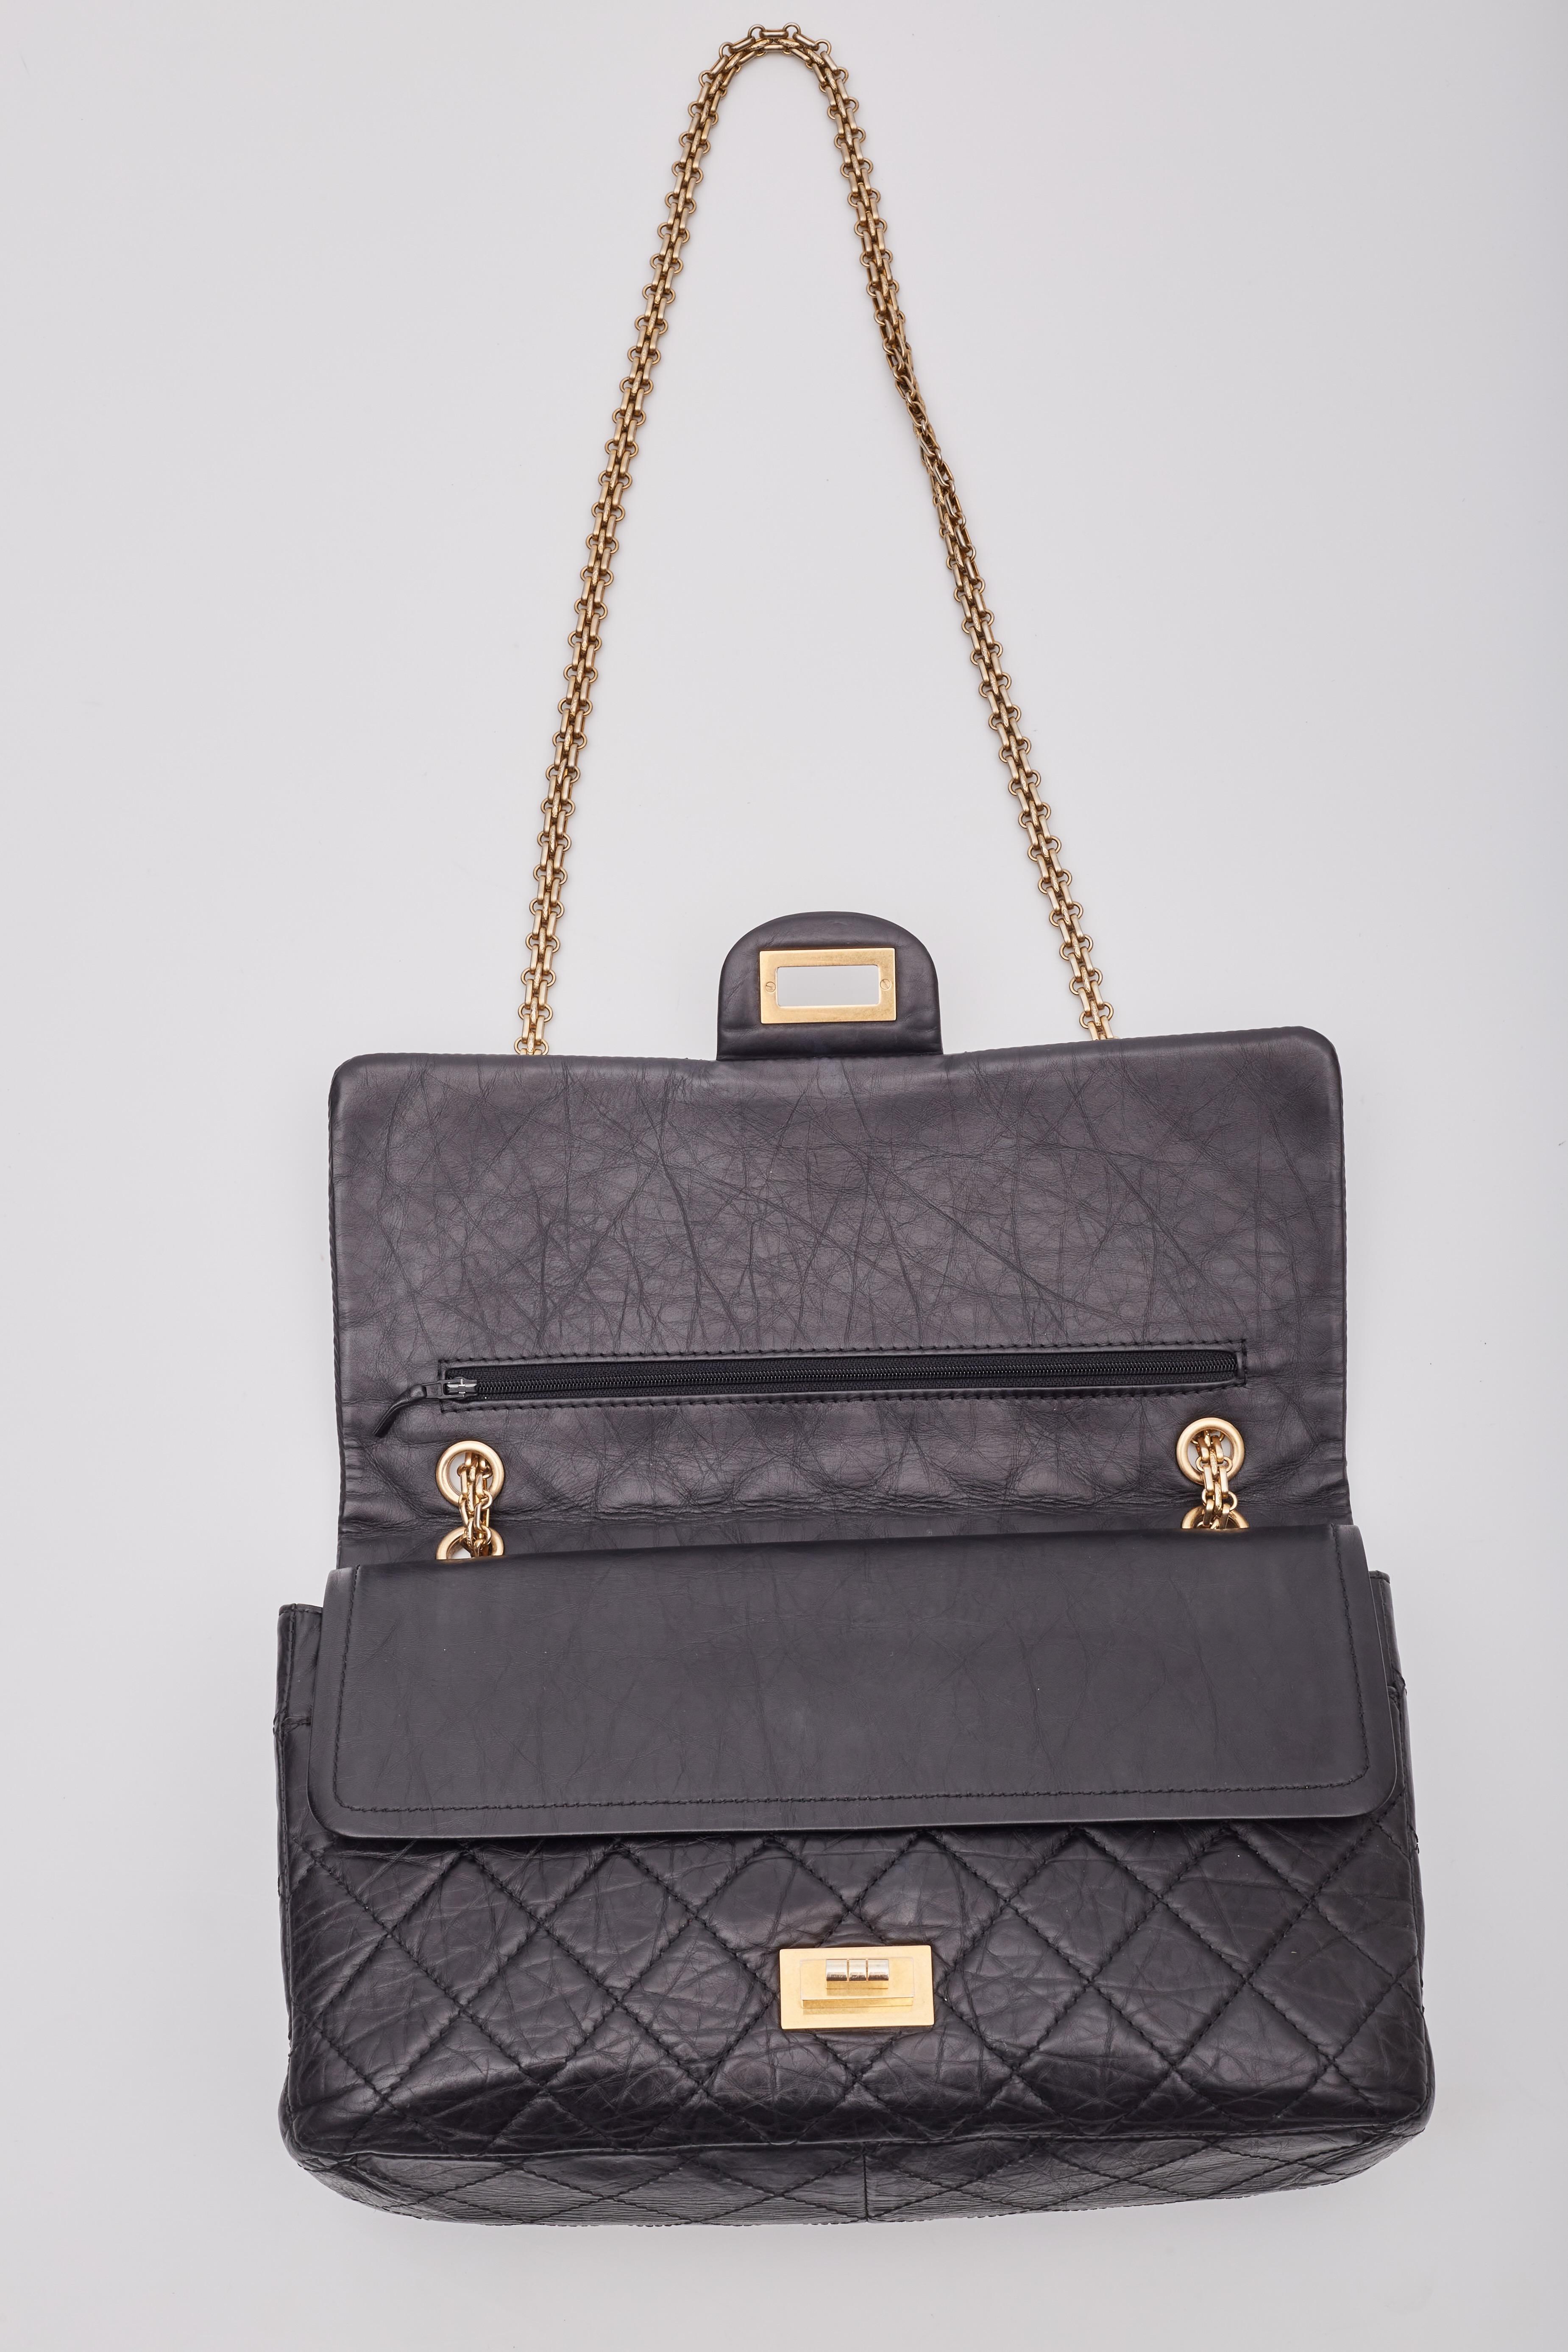 Chanel Calfskin Black Reissue 2.55 227 Flap Bag For Sale 6